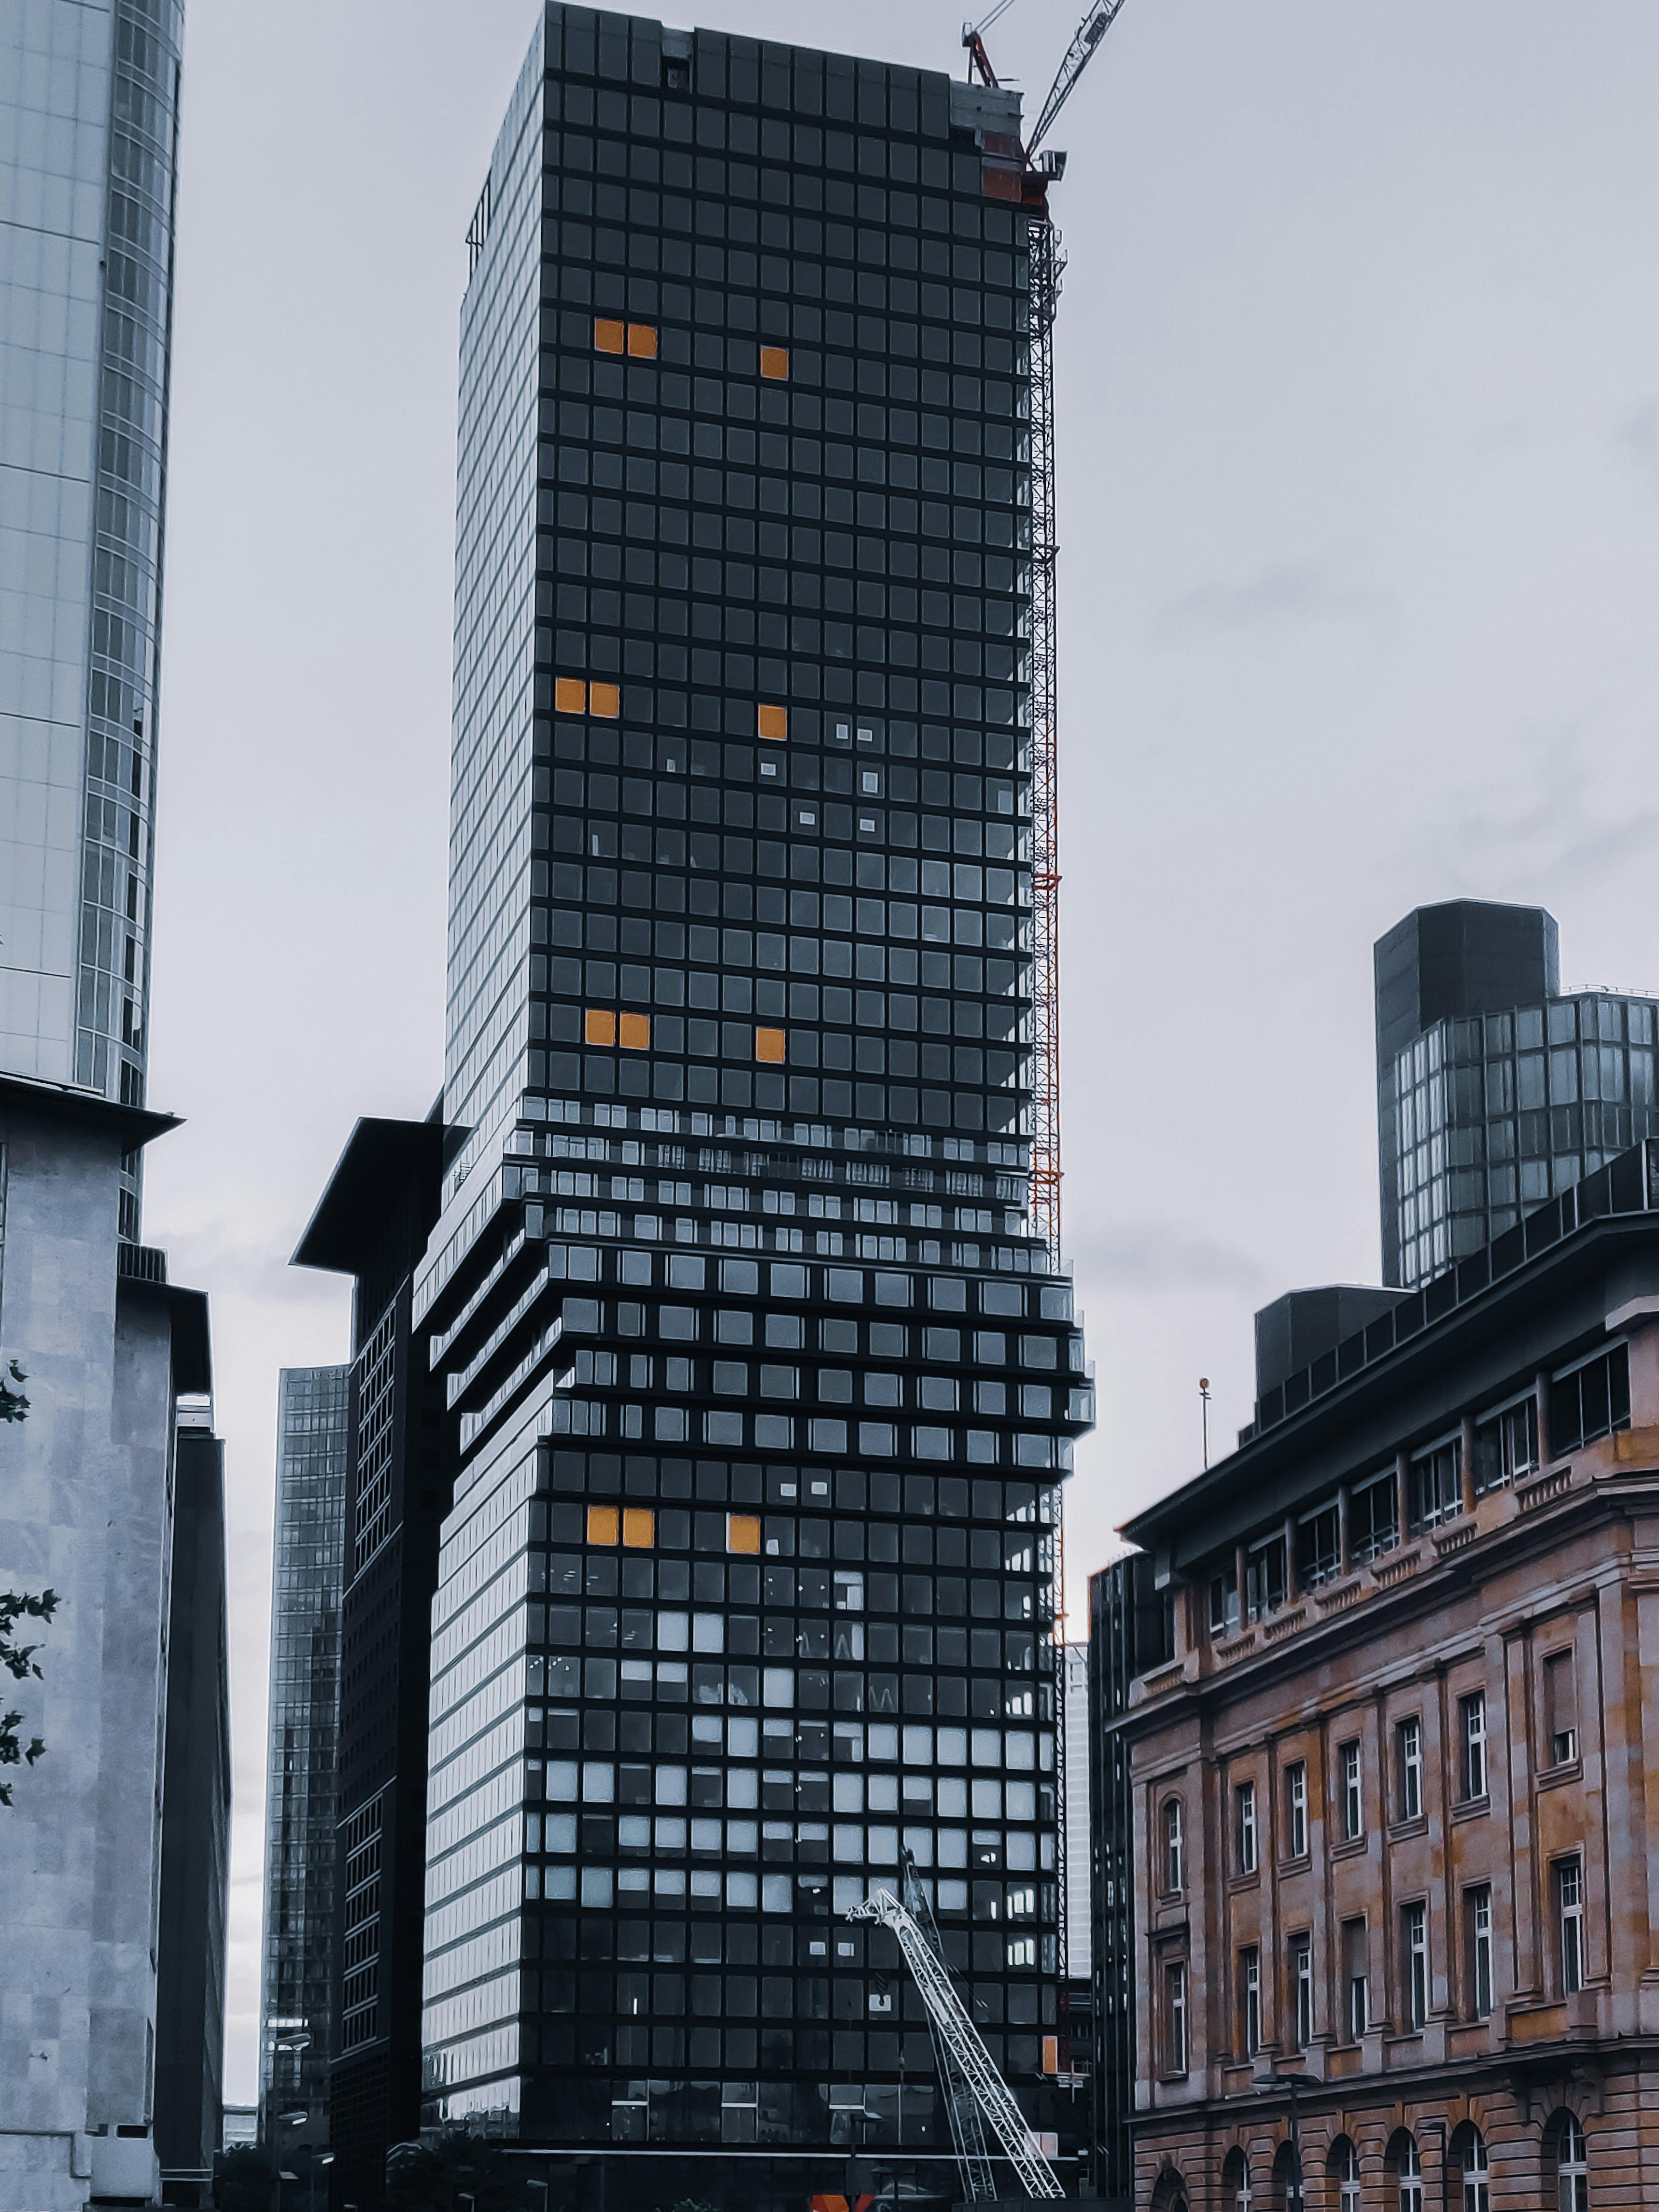 BIG Designs New Tower for Frankfurt